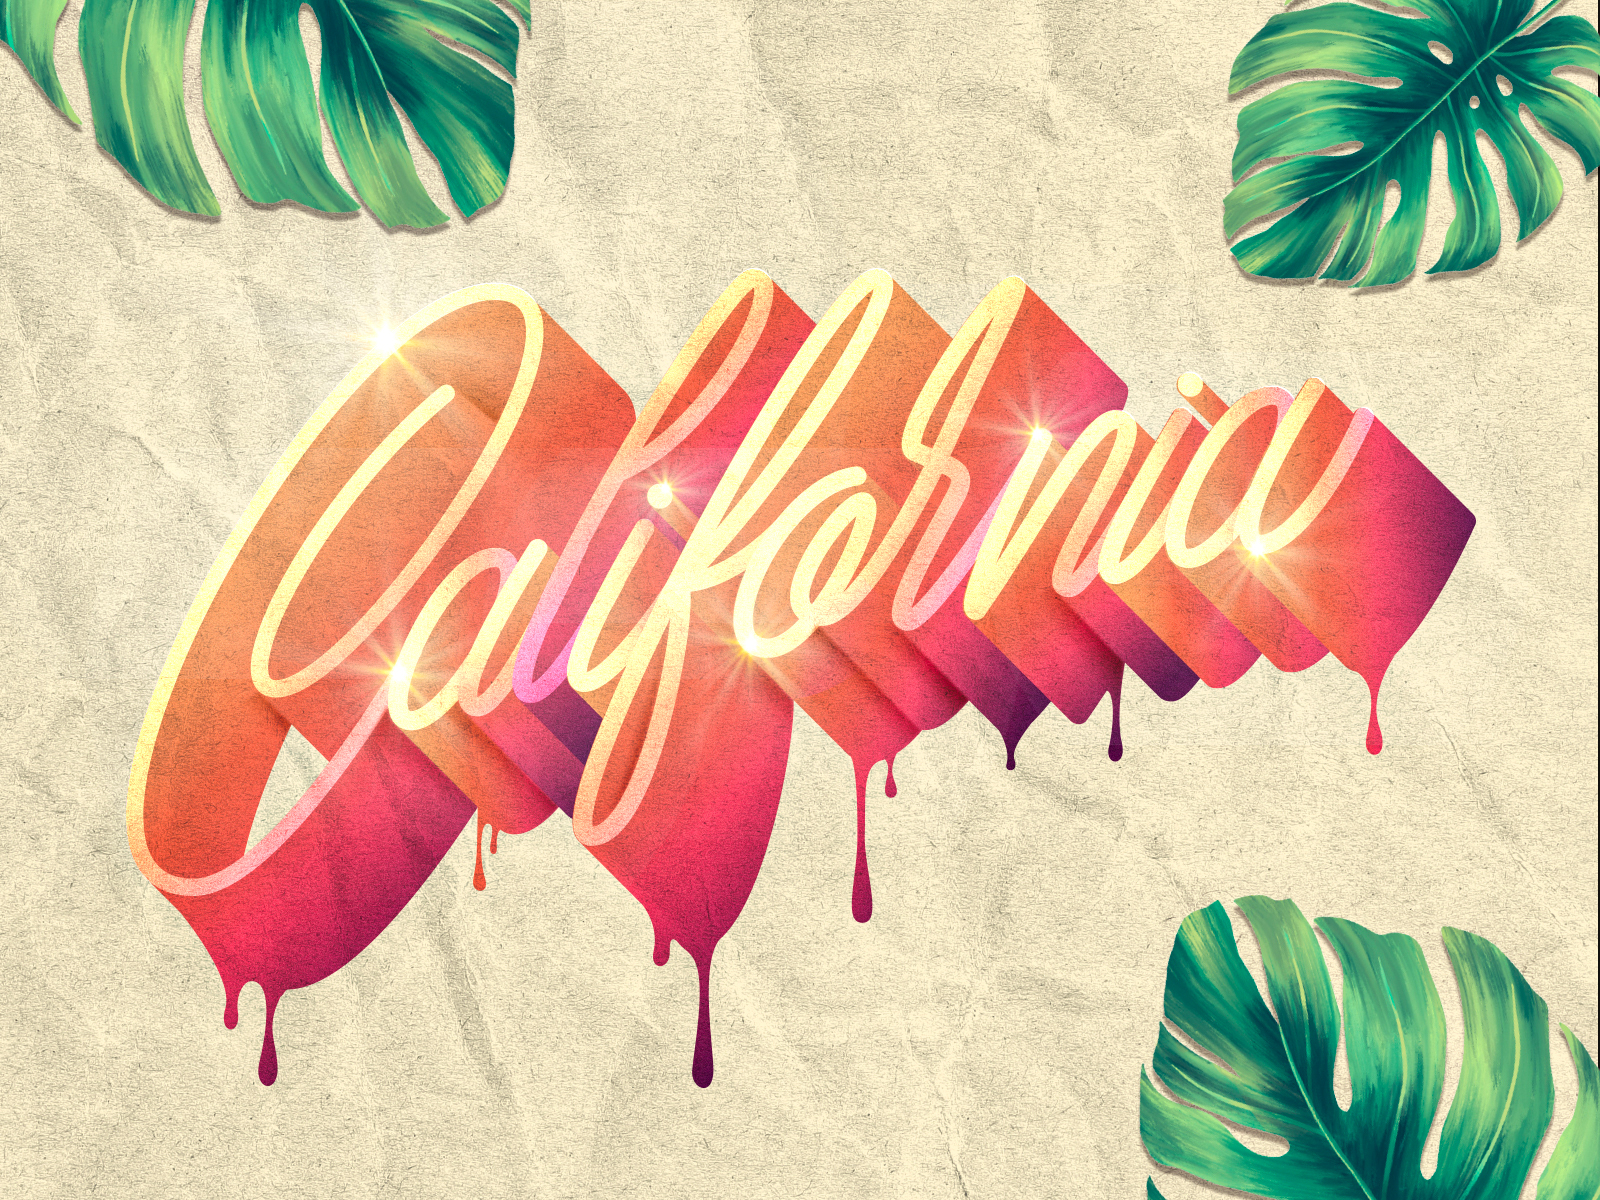 CALIFORNIA LOVE by Eddie Garcia on Dribbble